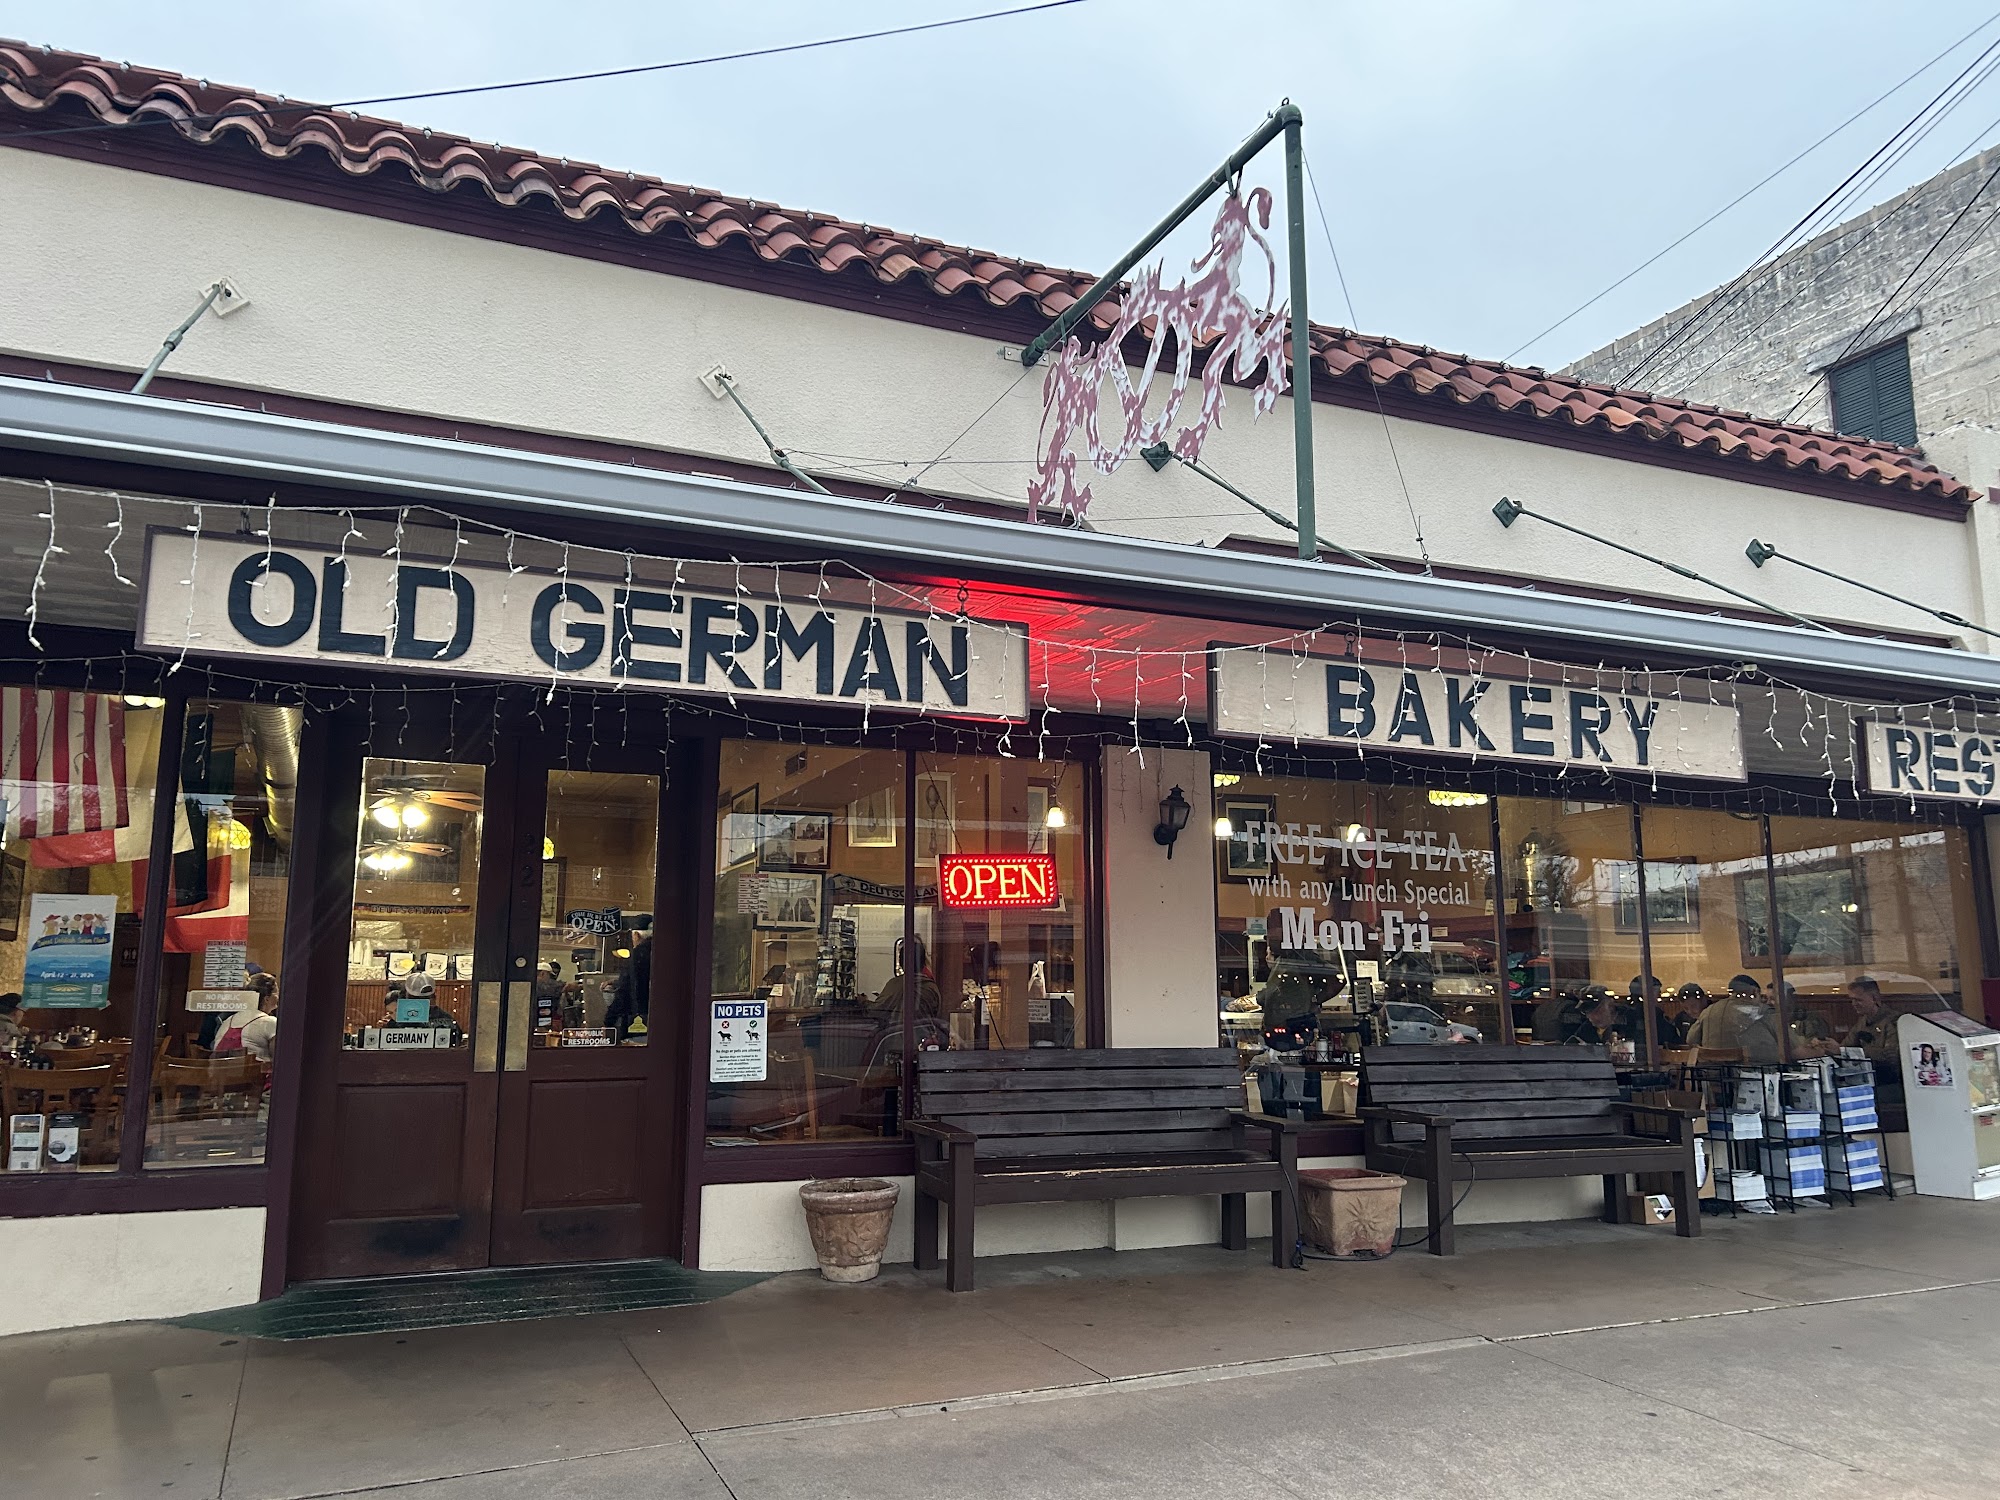 Old German Bakery & Restaurant